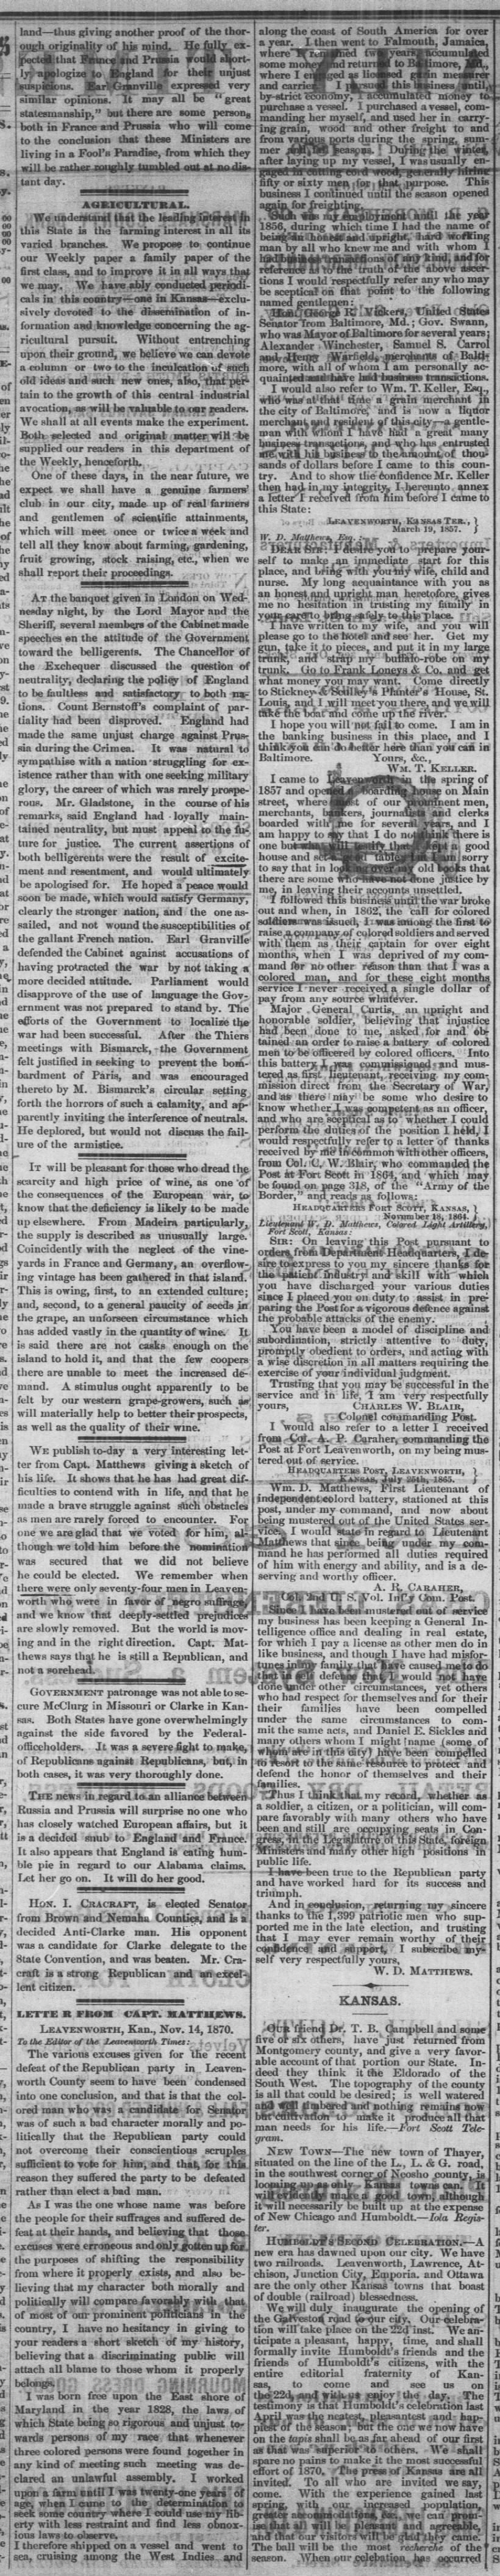 Letter, The Leavenworth Times (Leavenworth, Kansas) November 15, 1870, page 2